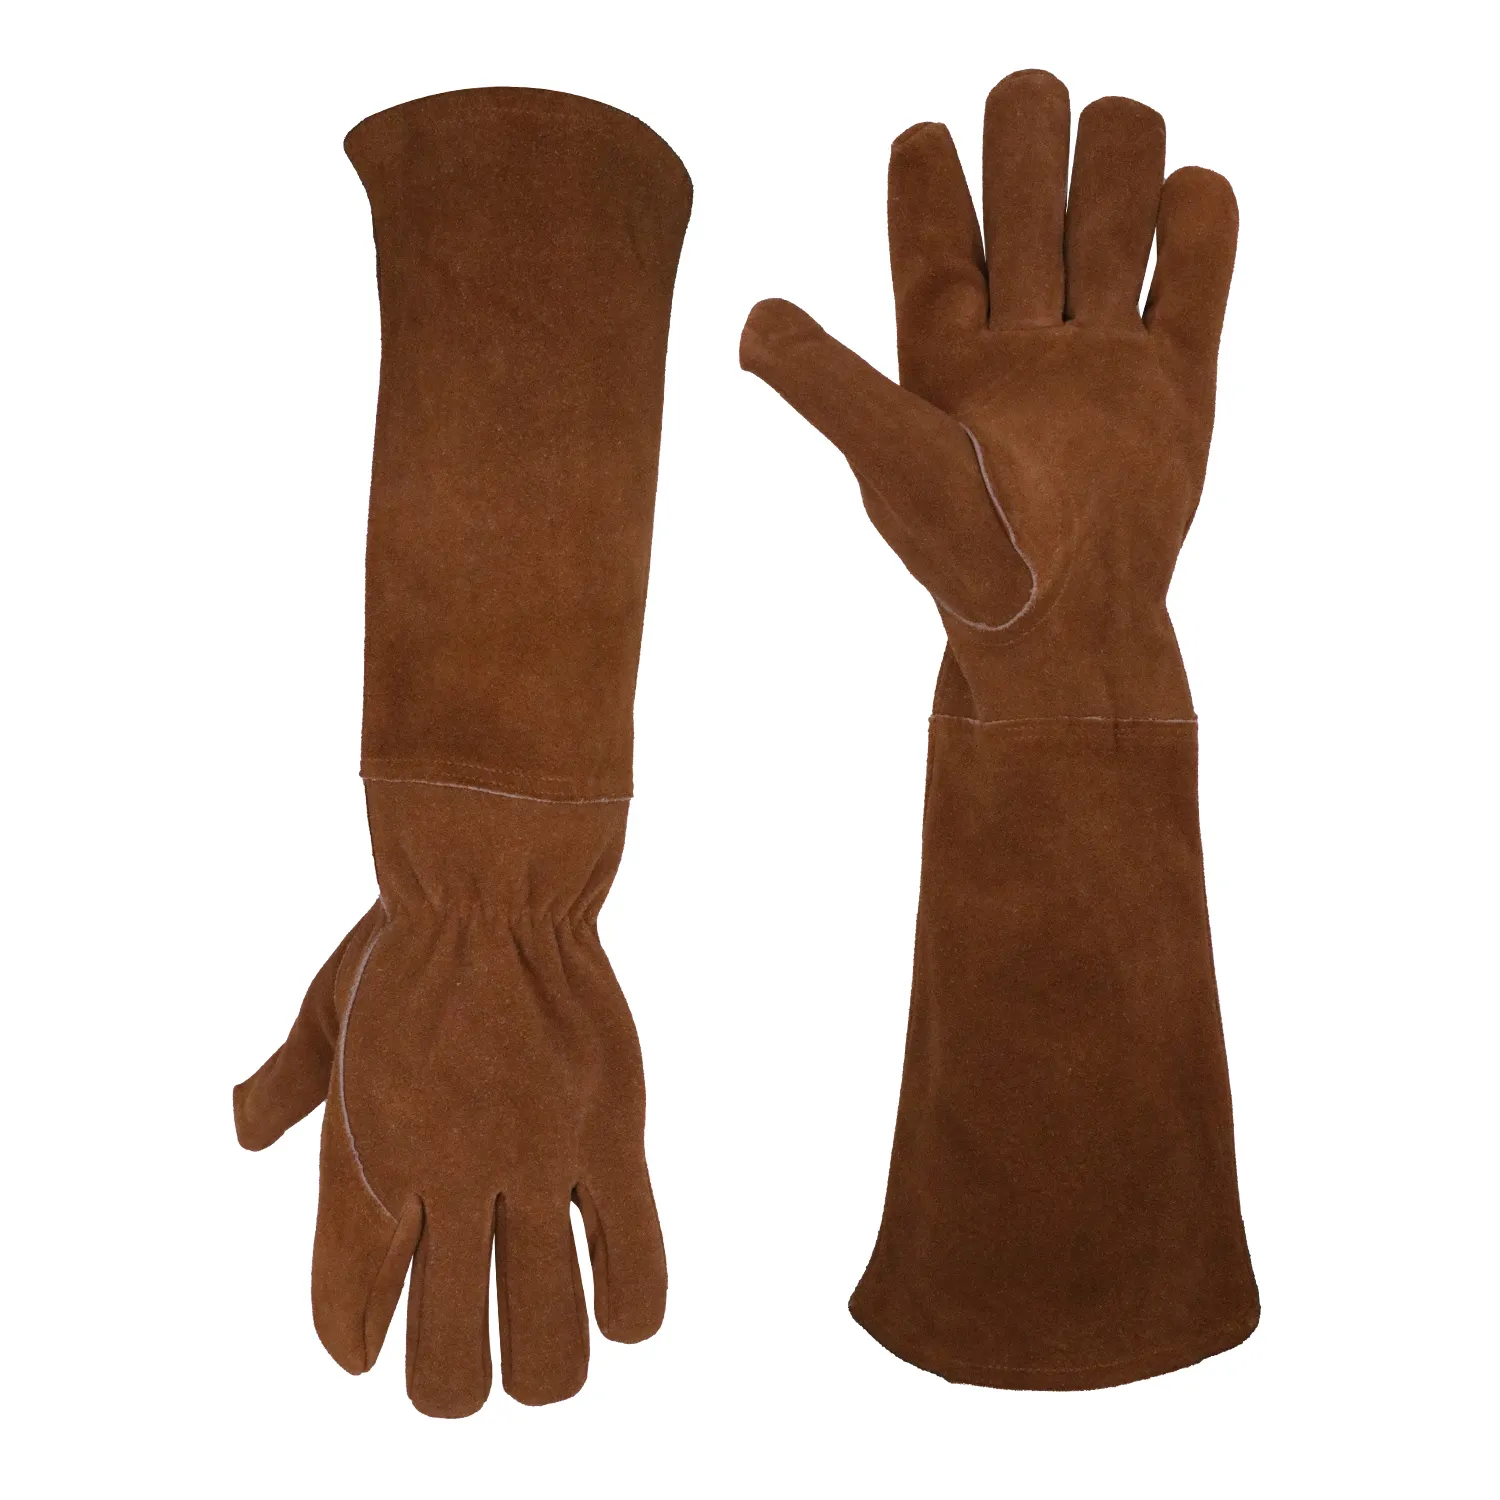 Gloves Pattern HANDLANDY Long Sleeve Leather Gardening Thorn Proof Gauntlet Leather Working Gloves